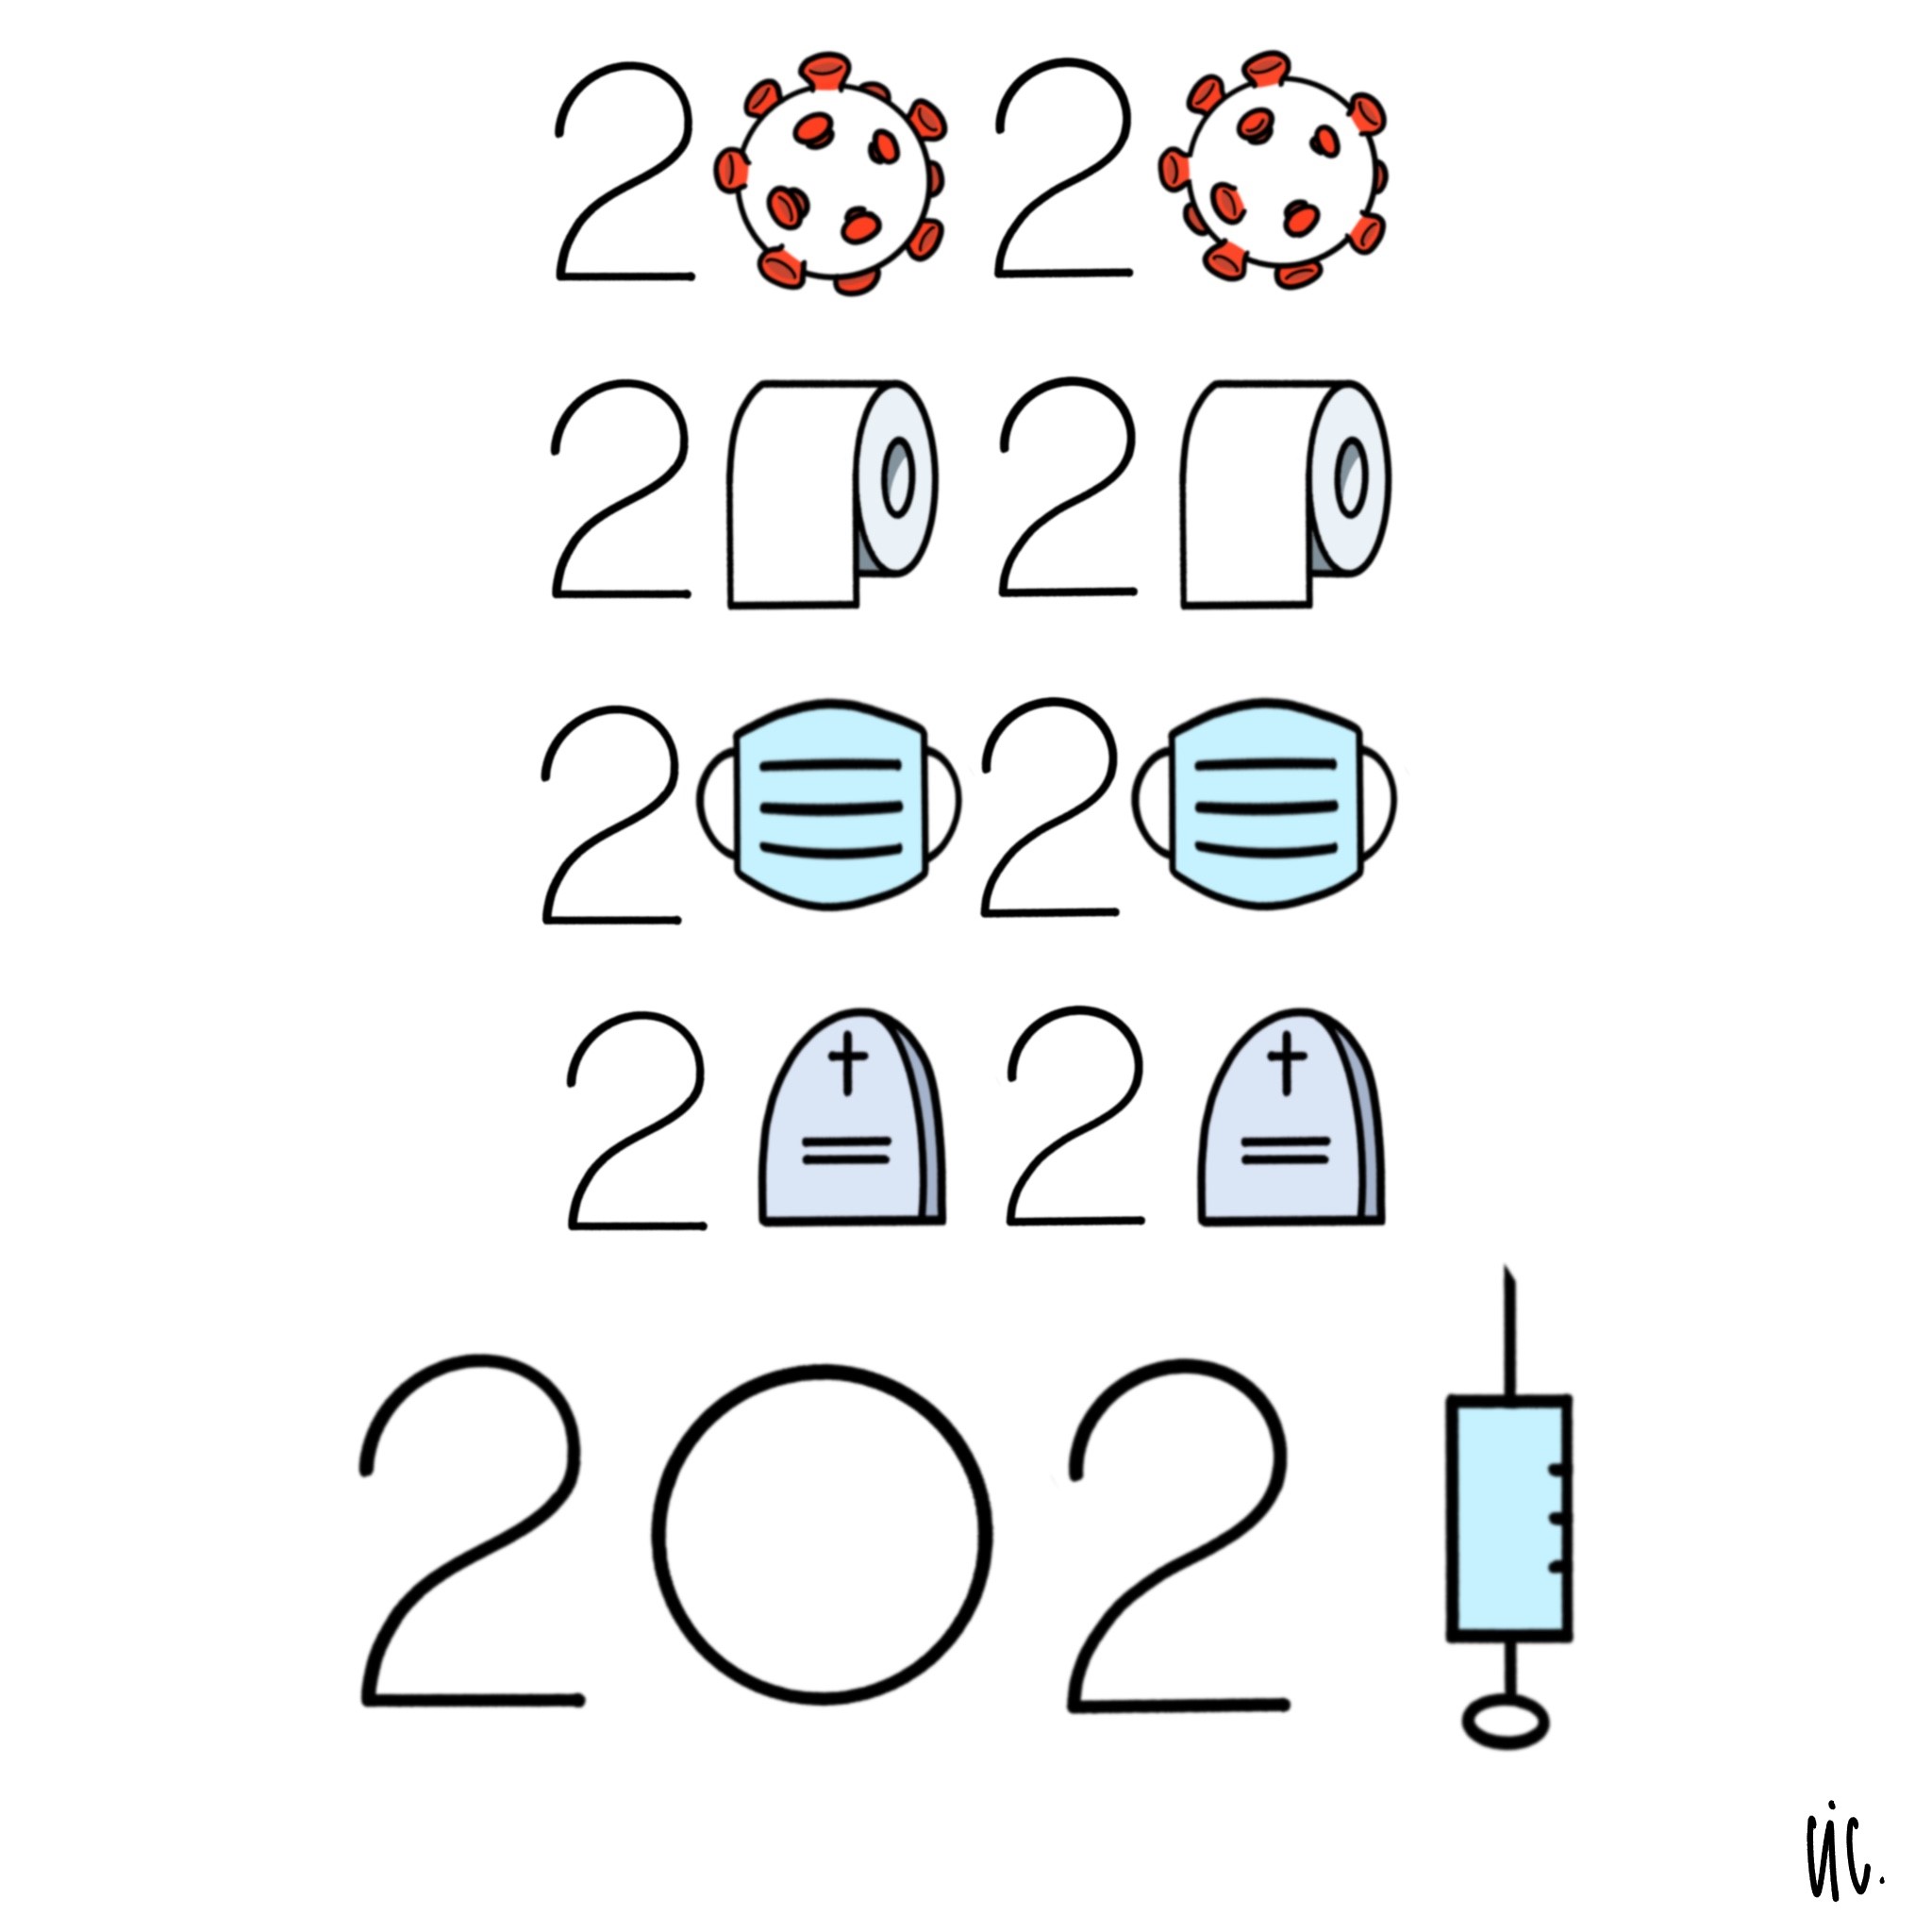 2020 e 2021